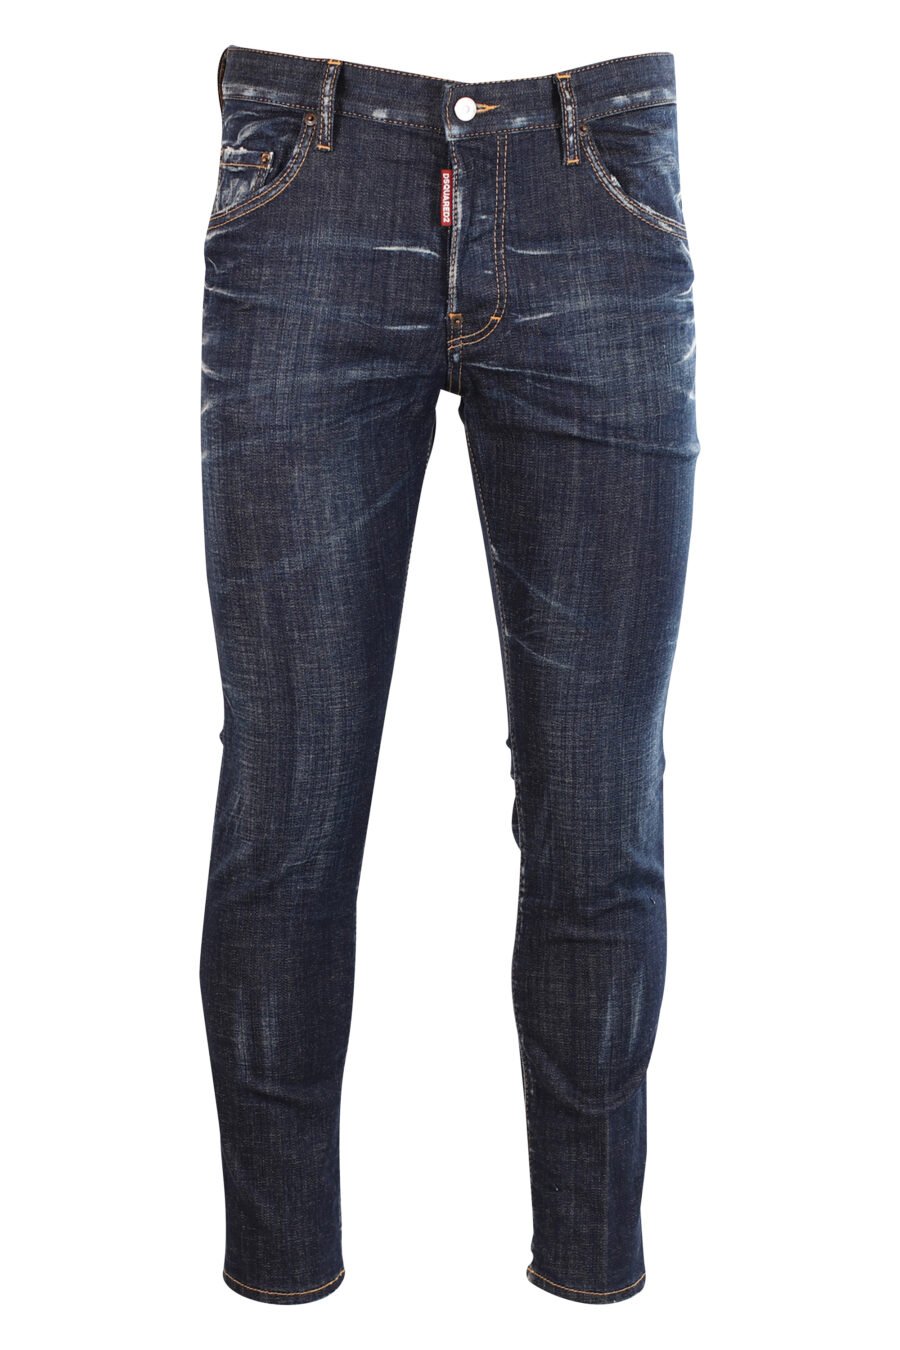 Dark blue semi frayed "skater jean" jeans - 8052134939215